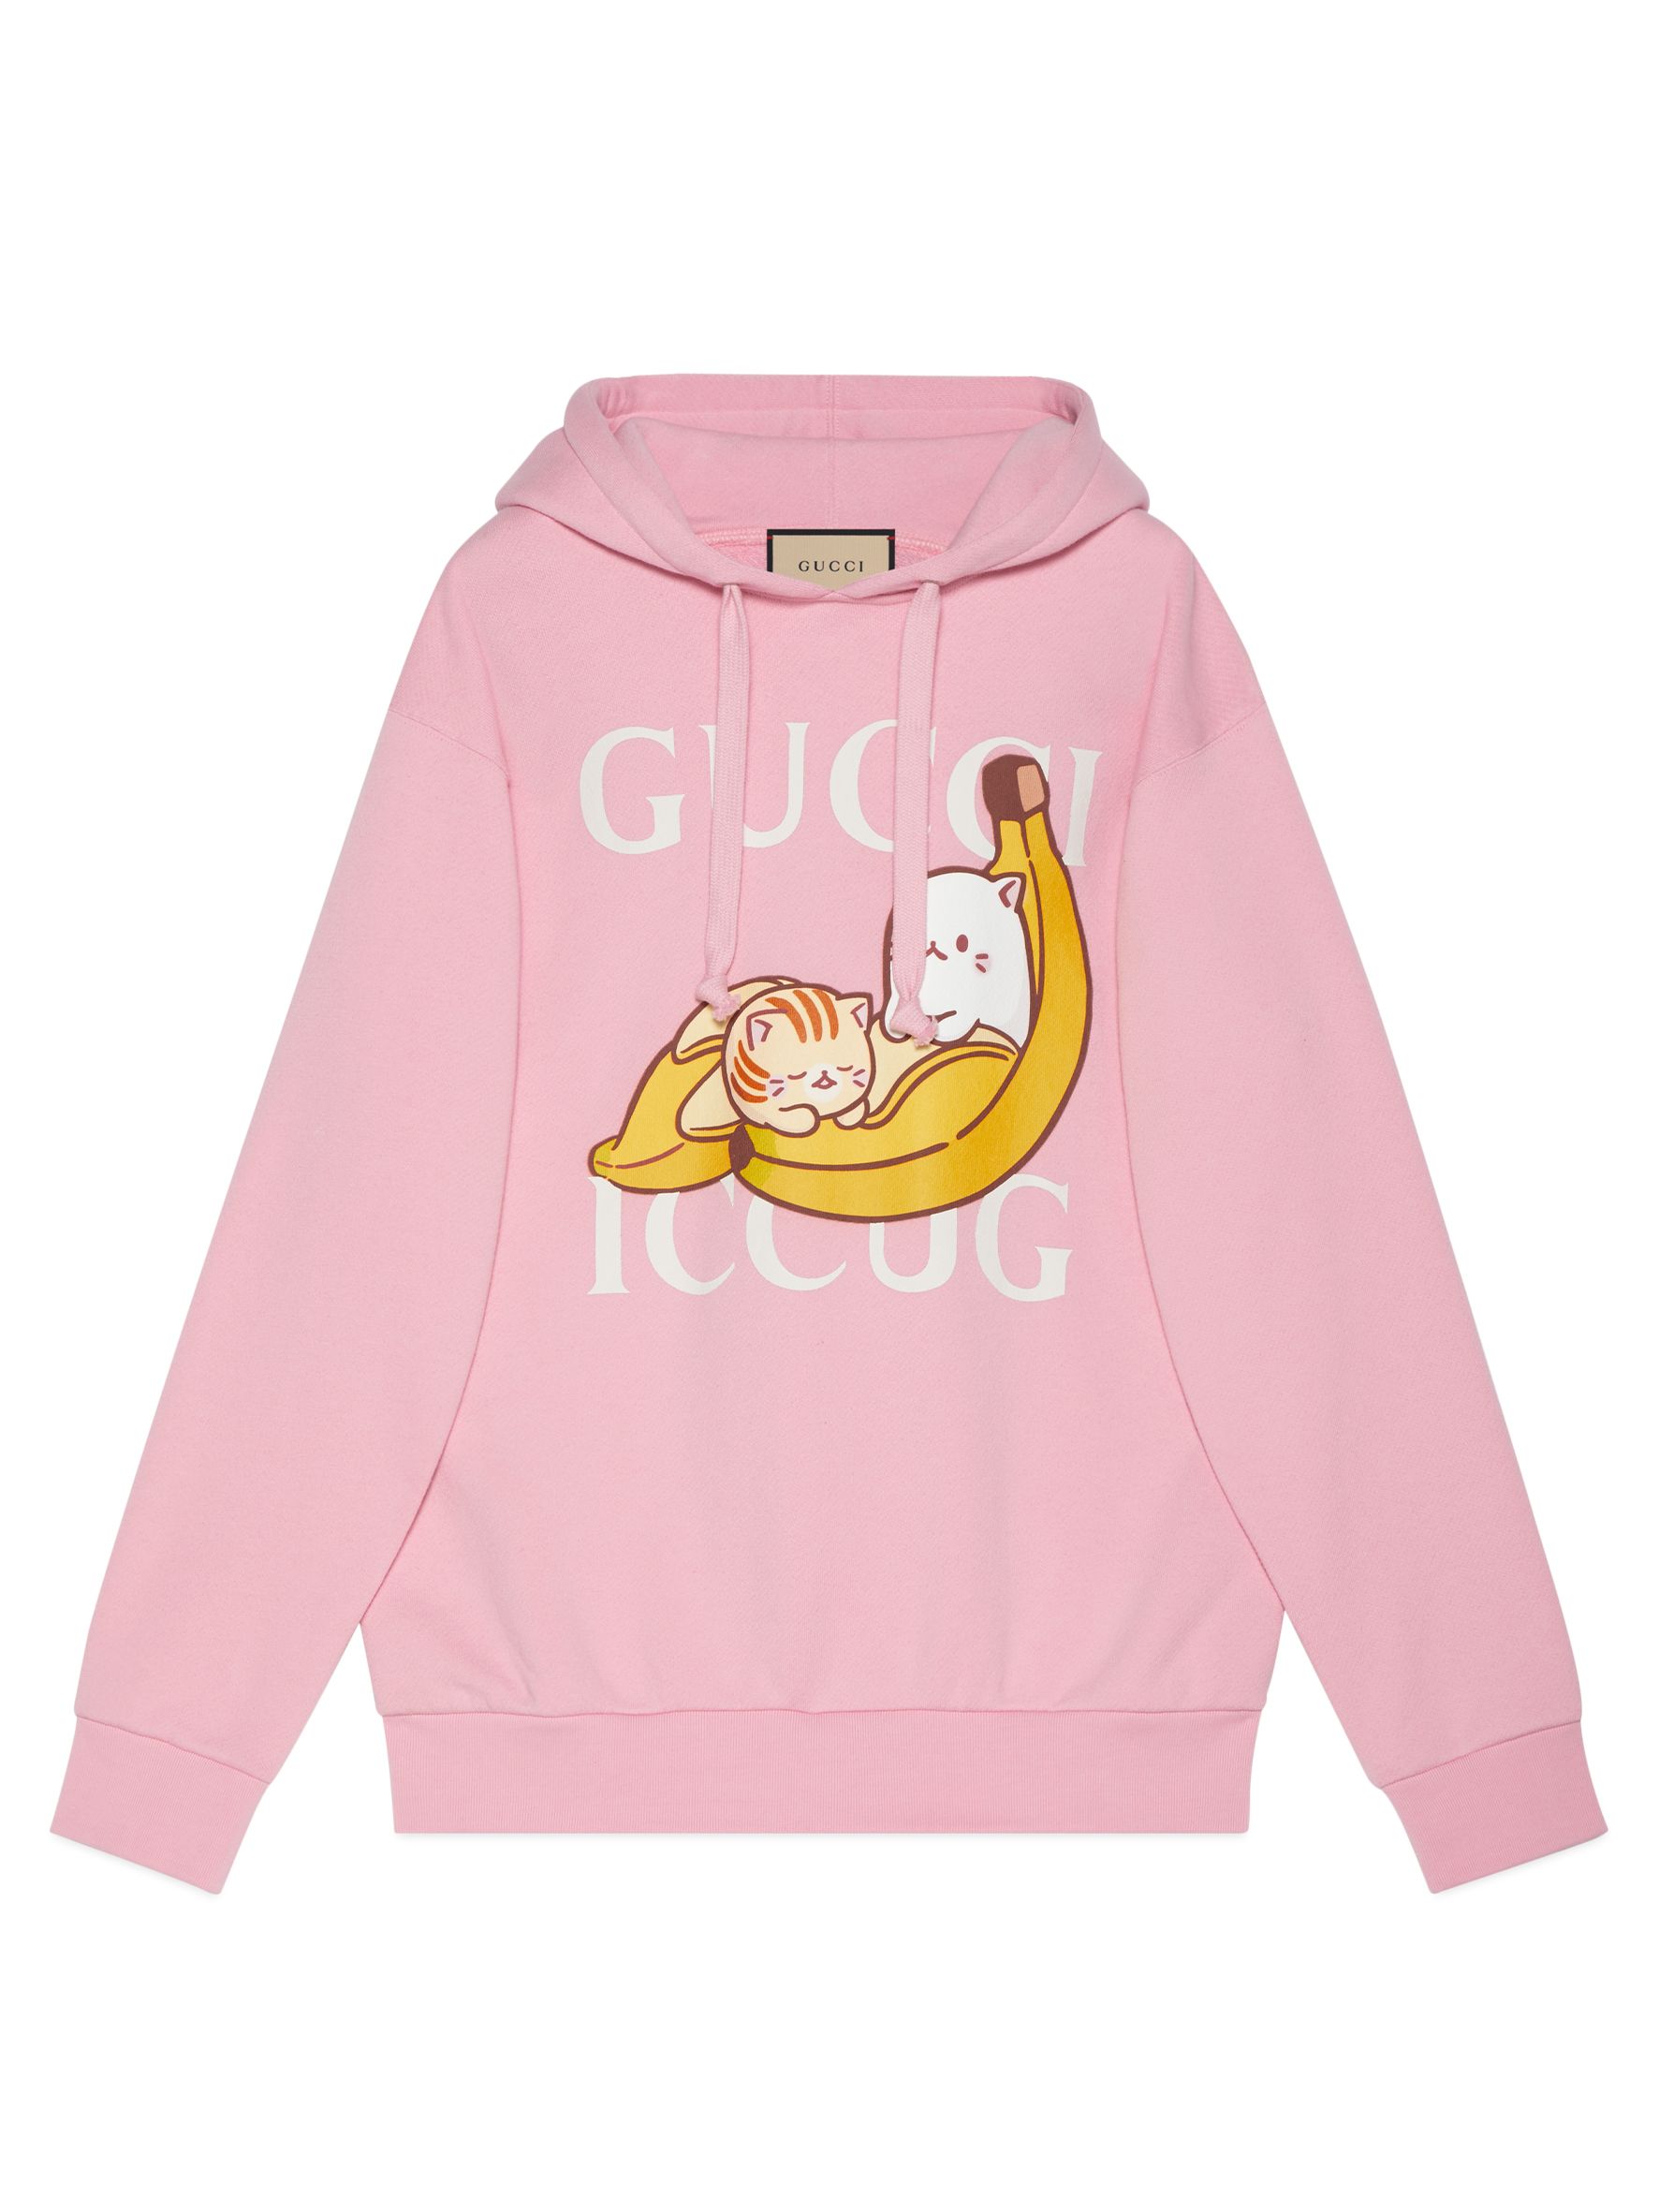 Crunchyroll, Gucci Team up for New Bananya Gear